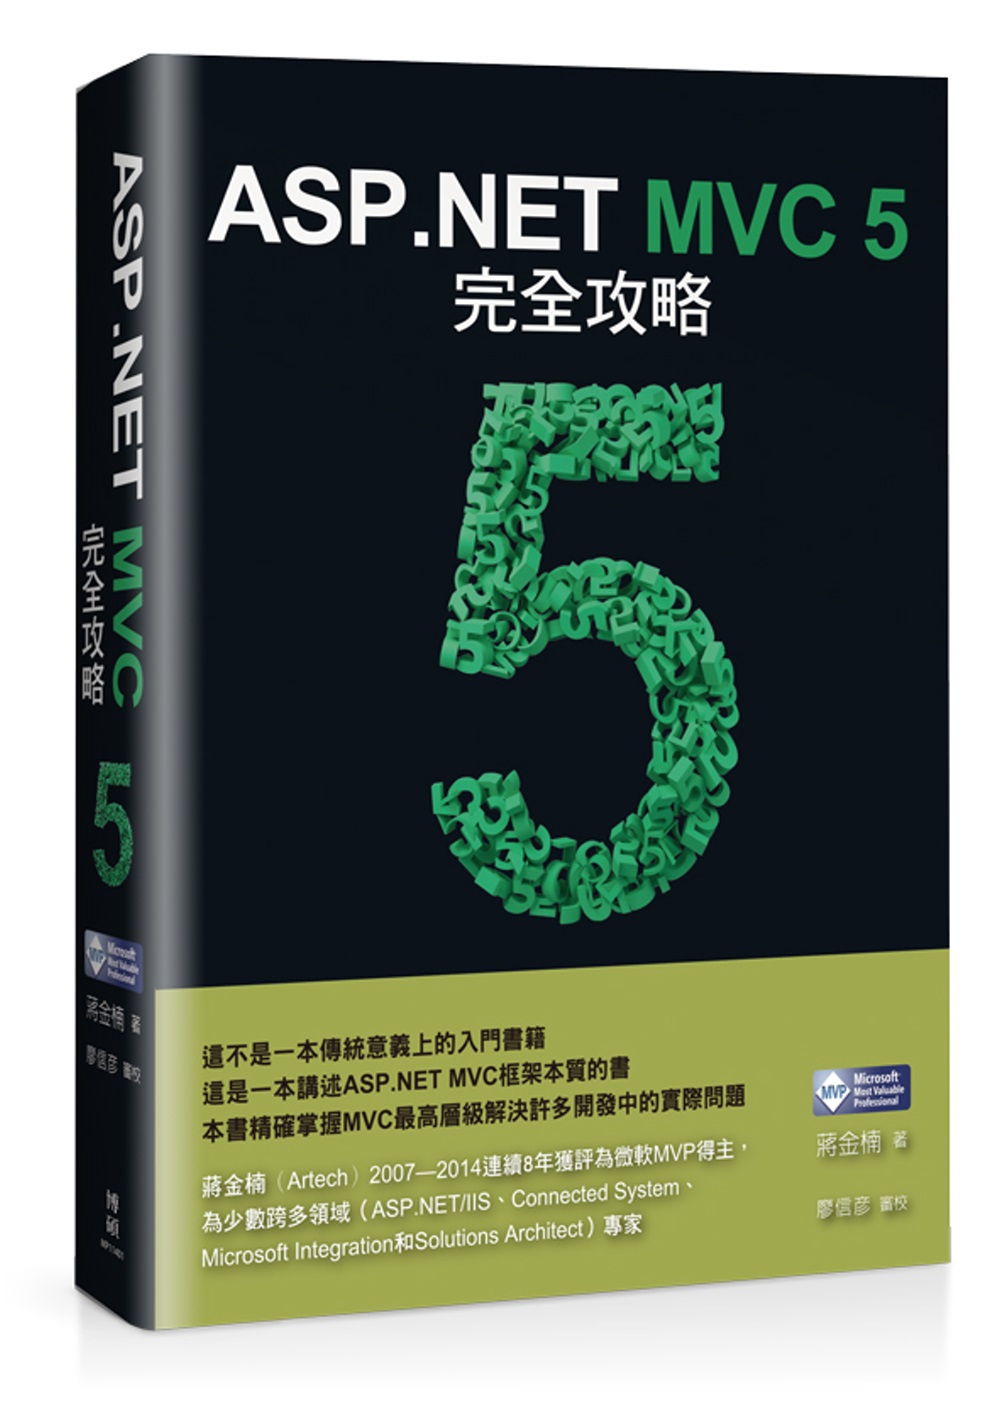 ASP.NET MVC 5 完全攻略